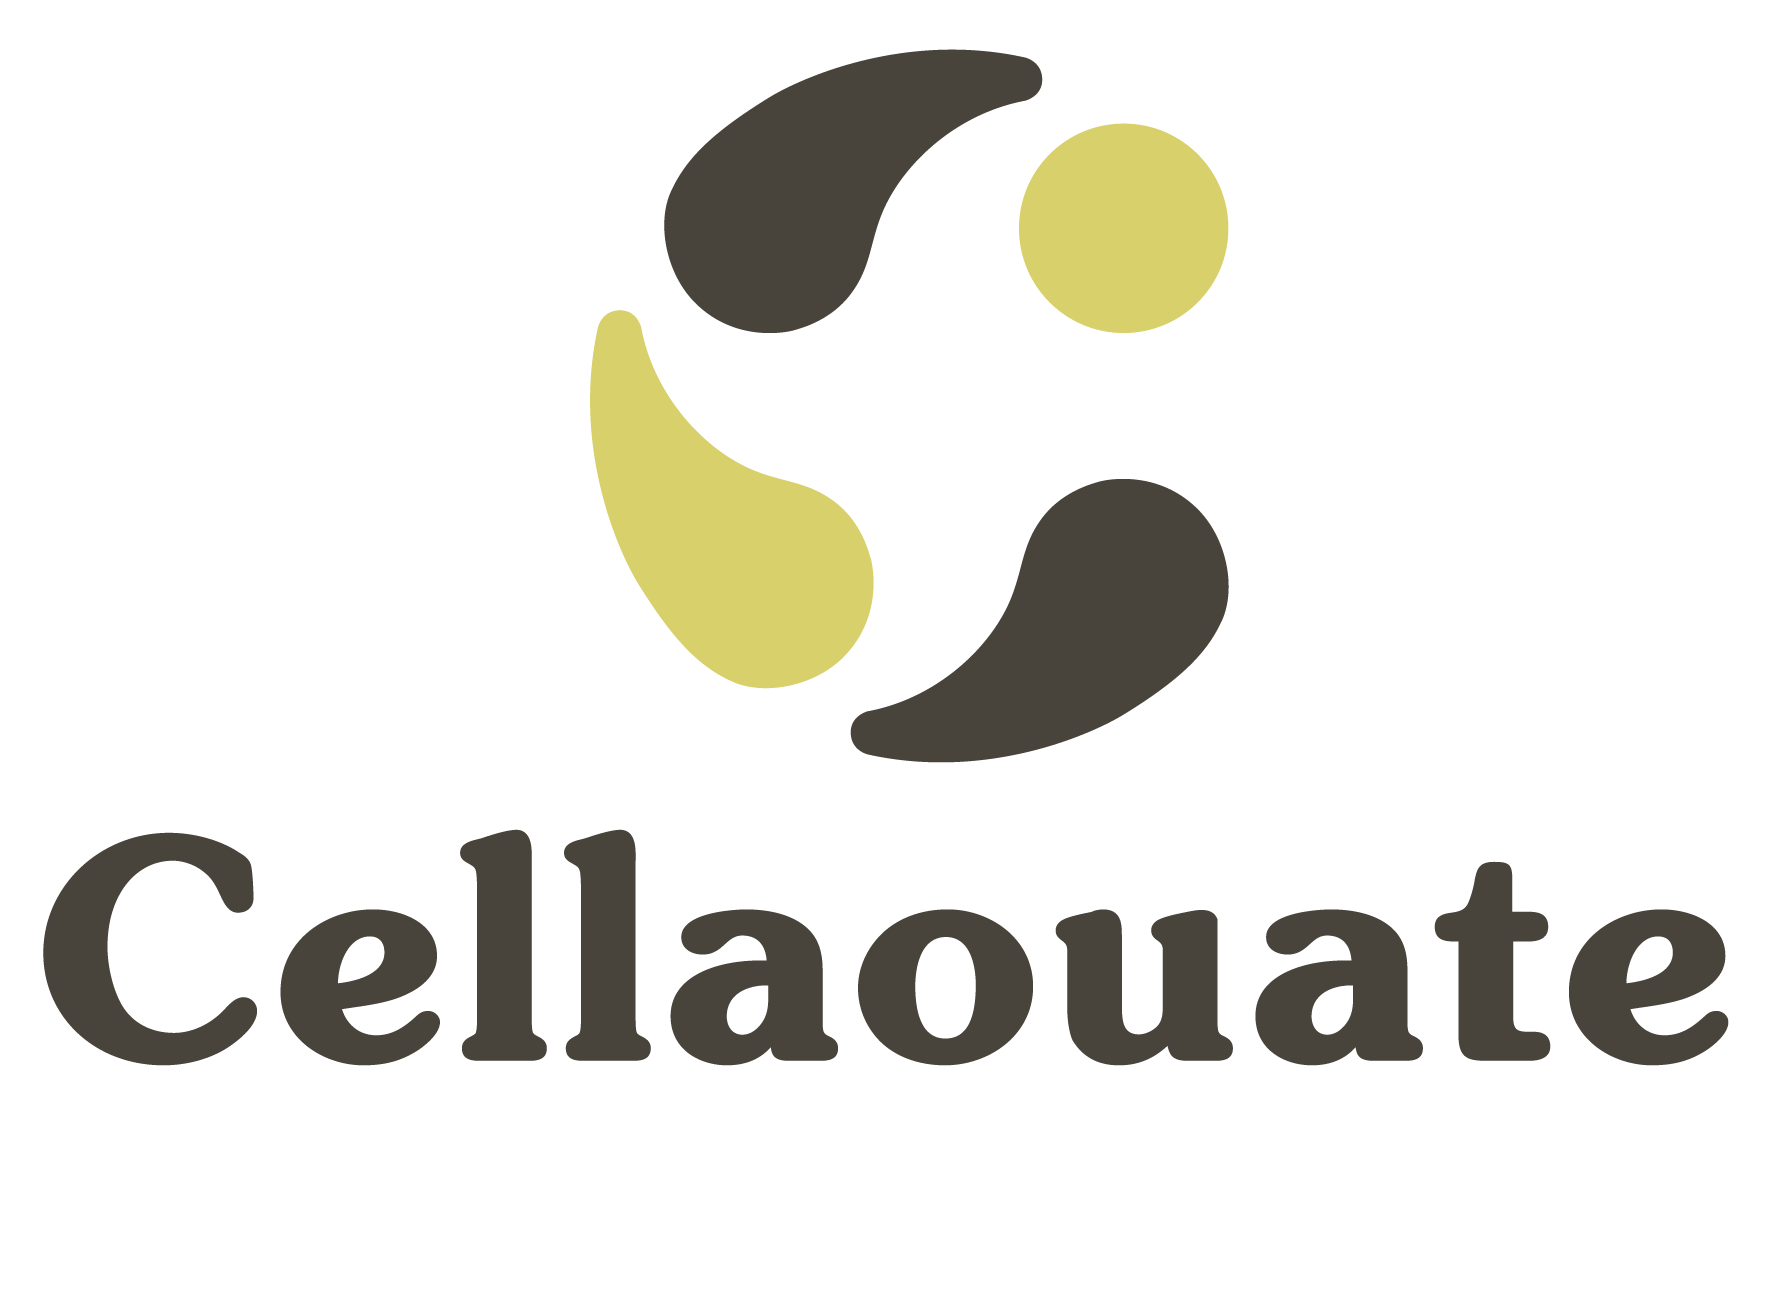 Cellaouate